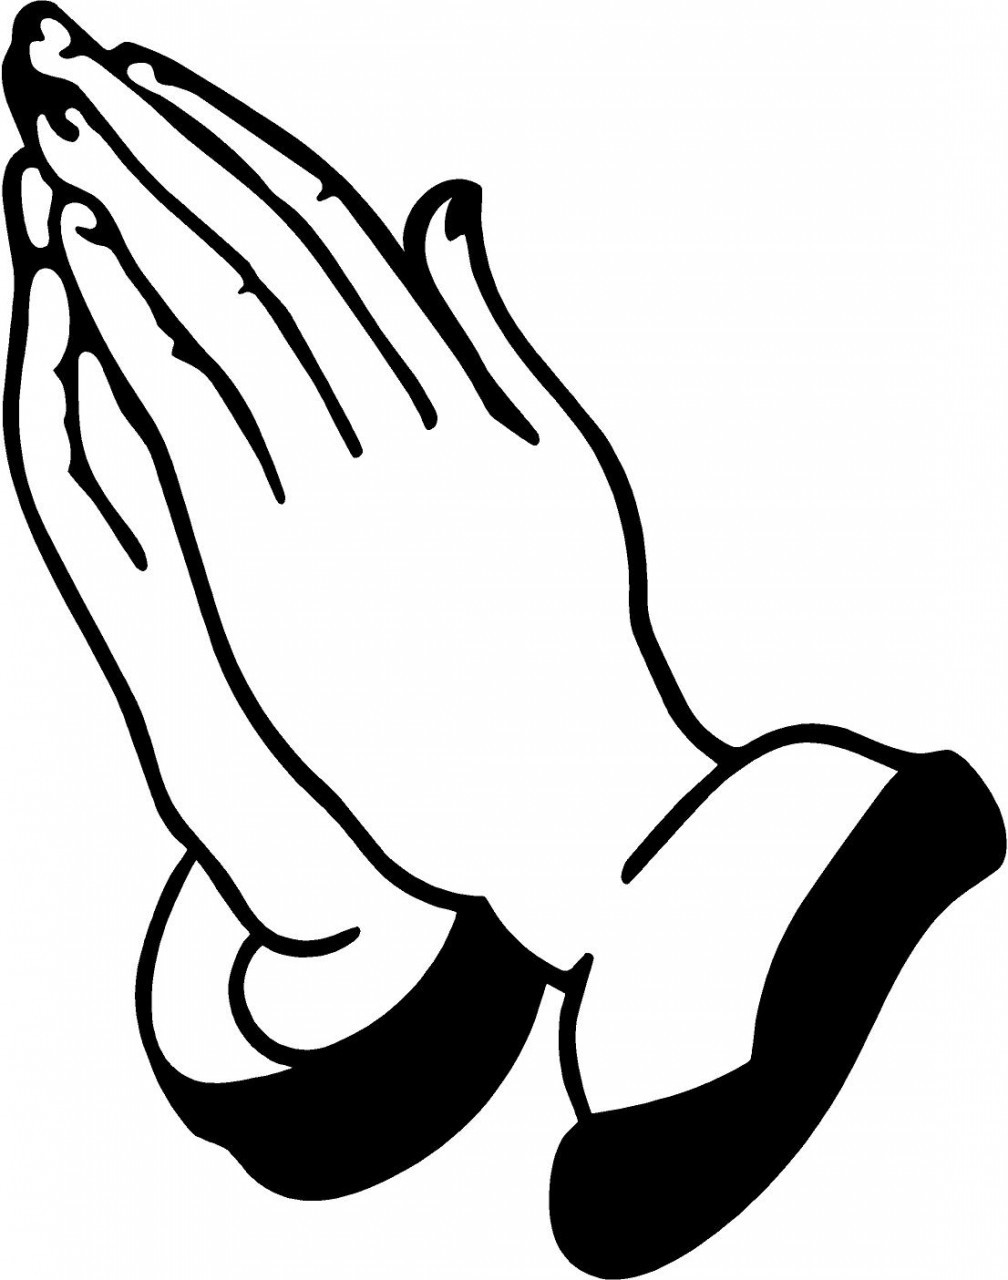 Praying Hands Vector - ClipArt Best